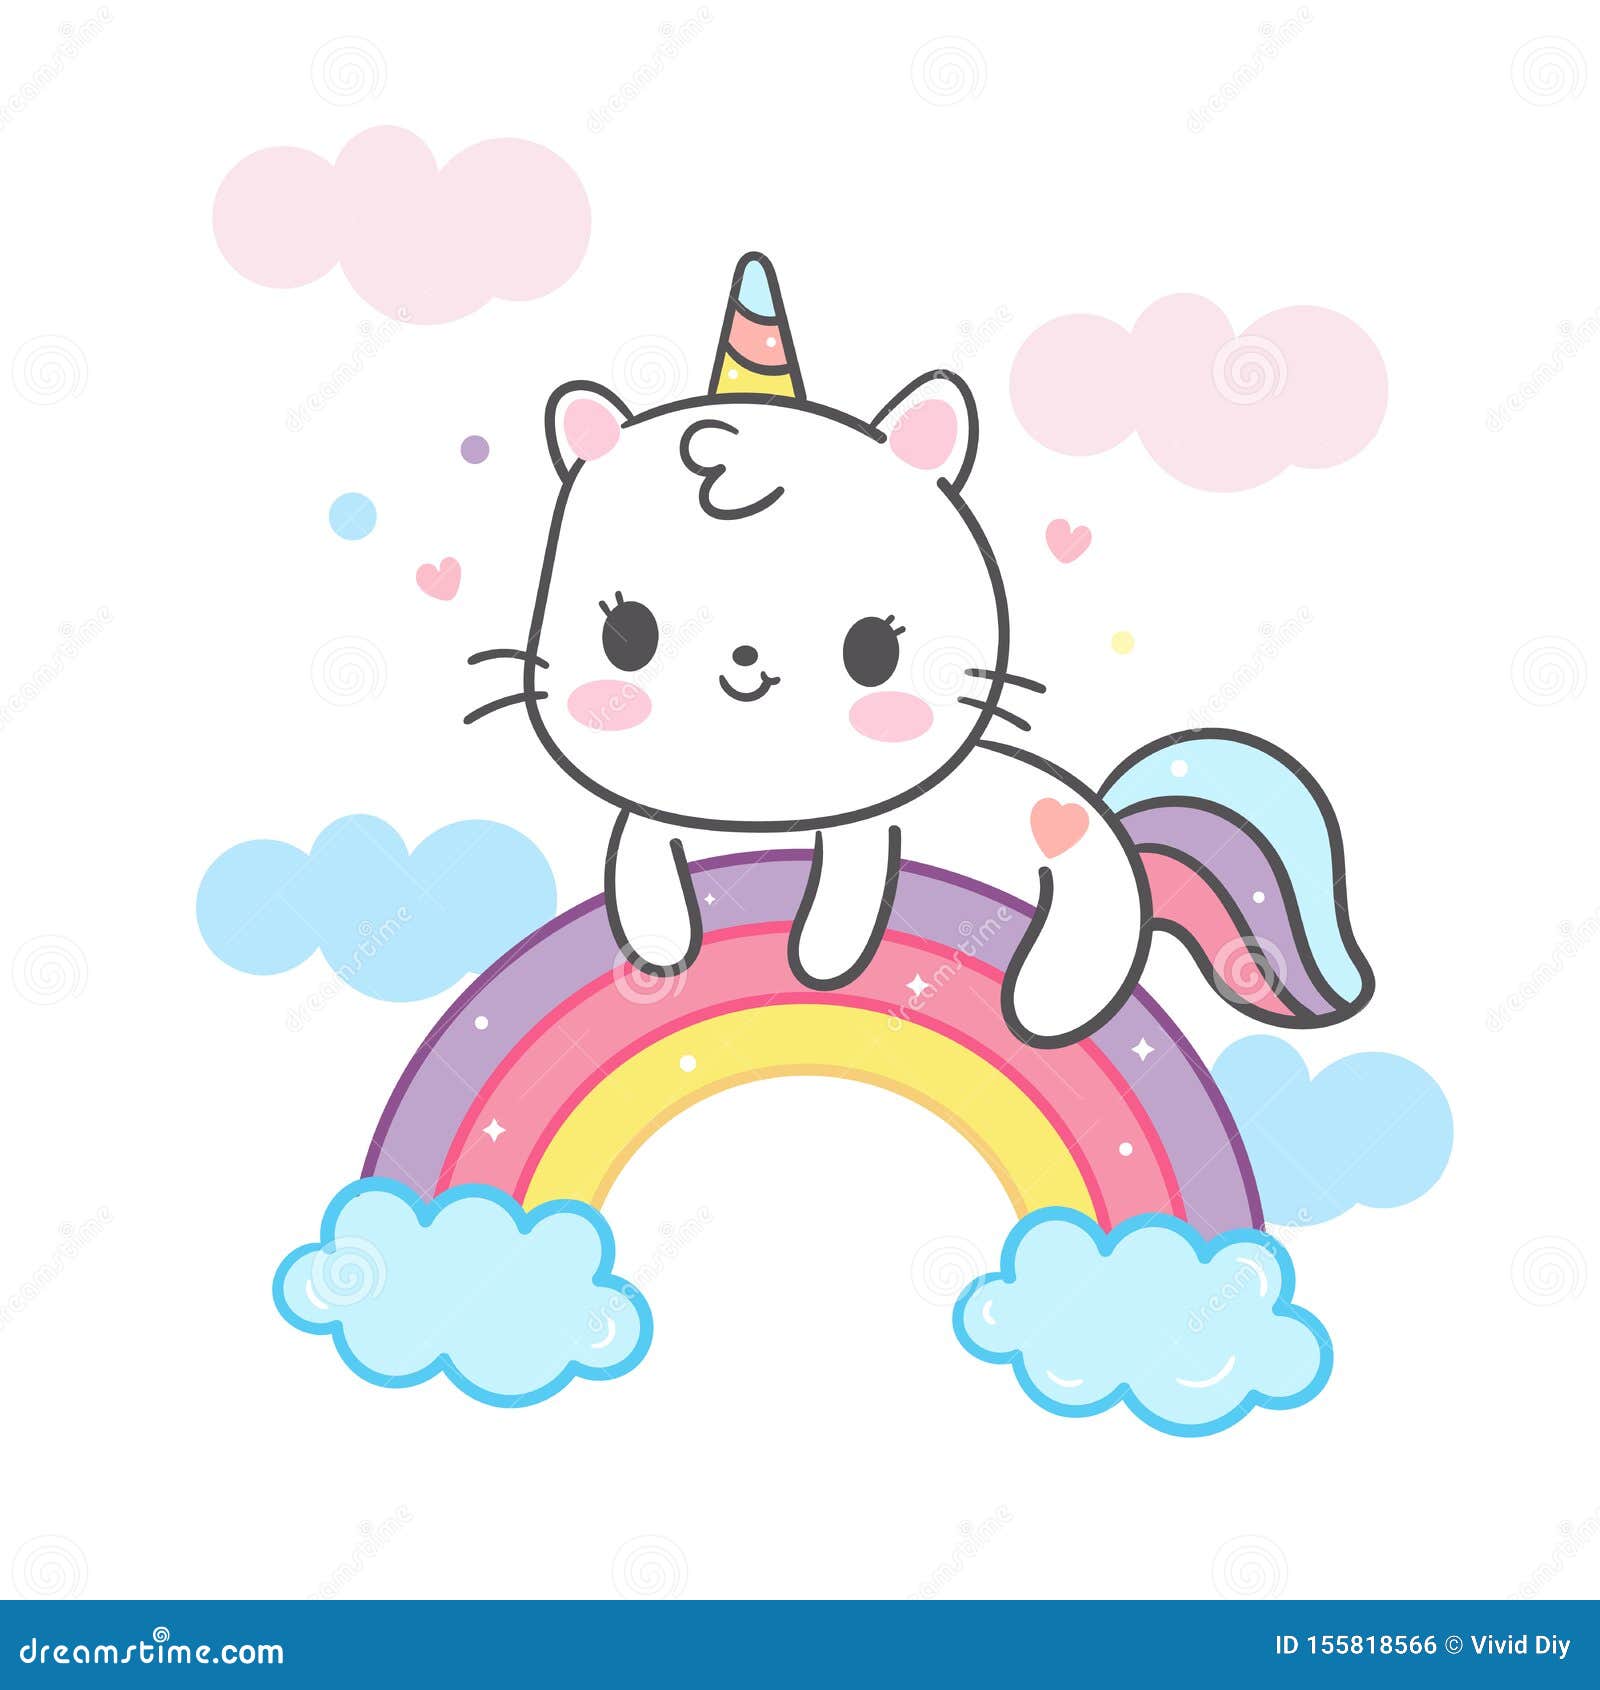 Cat unicorn icon cute funny fantasy animal Vector Image